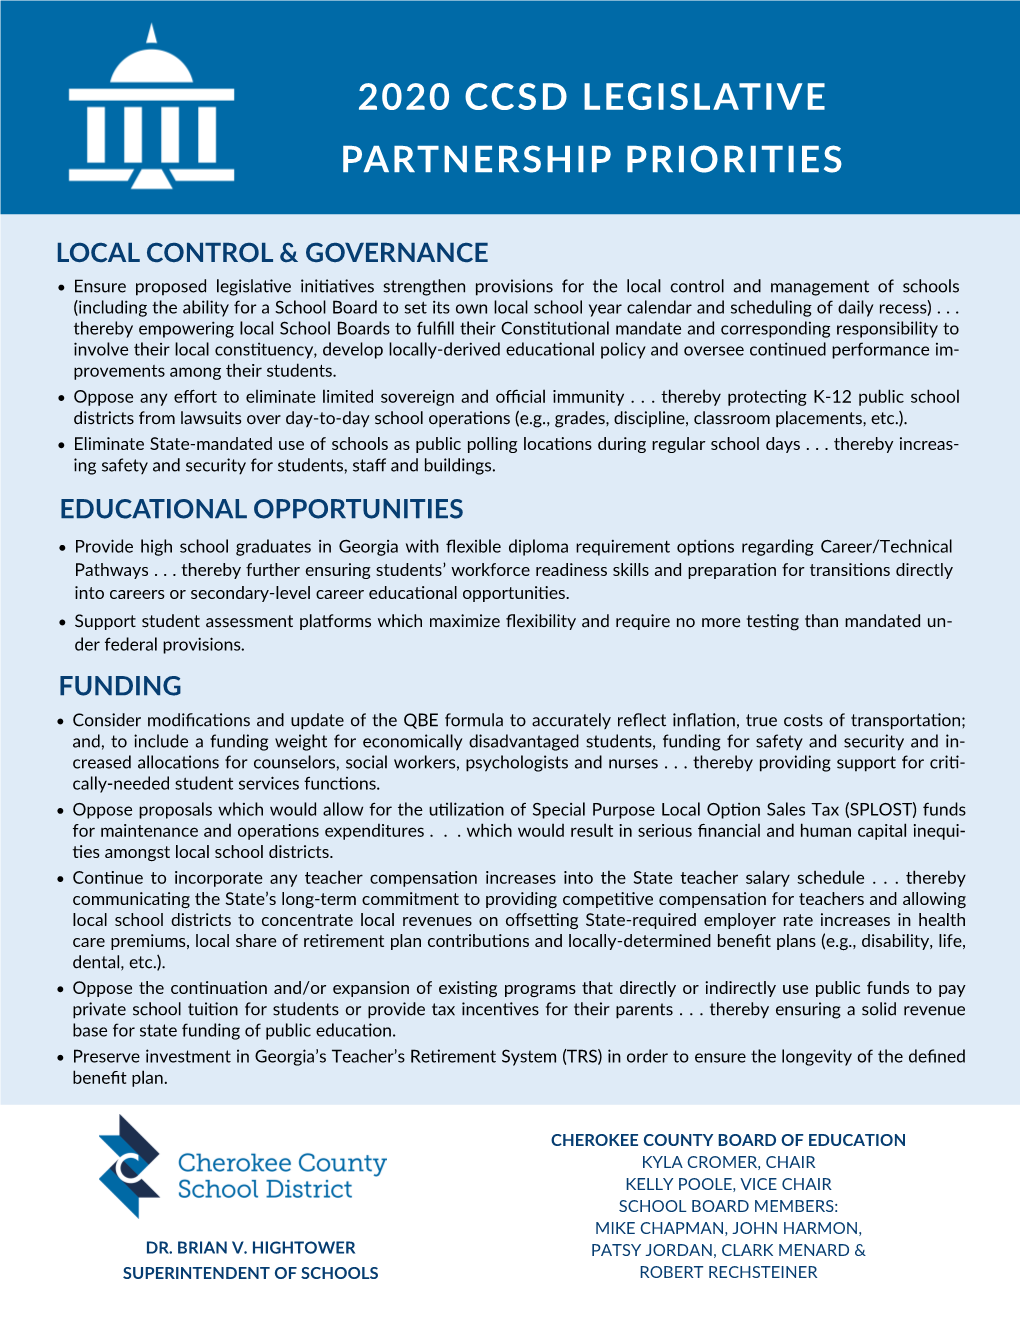 CCSD 2020 Legislative Partnership Priorities